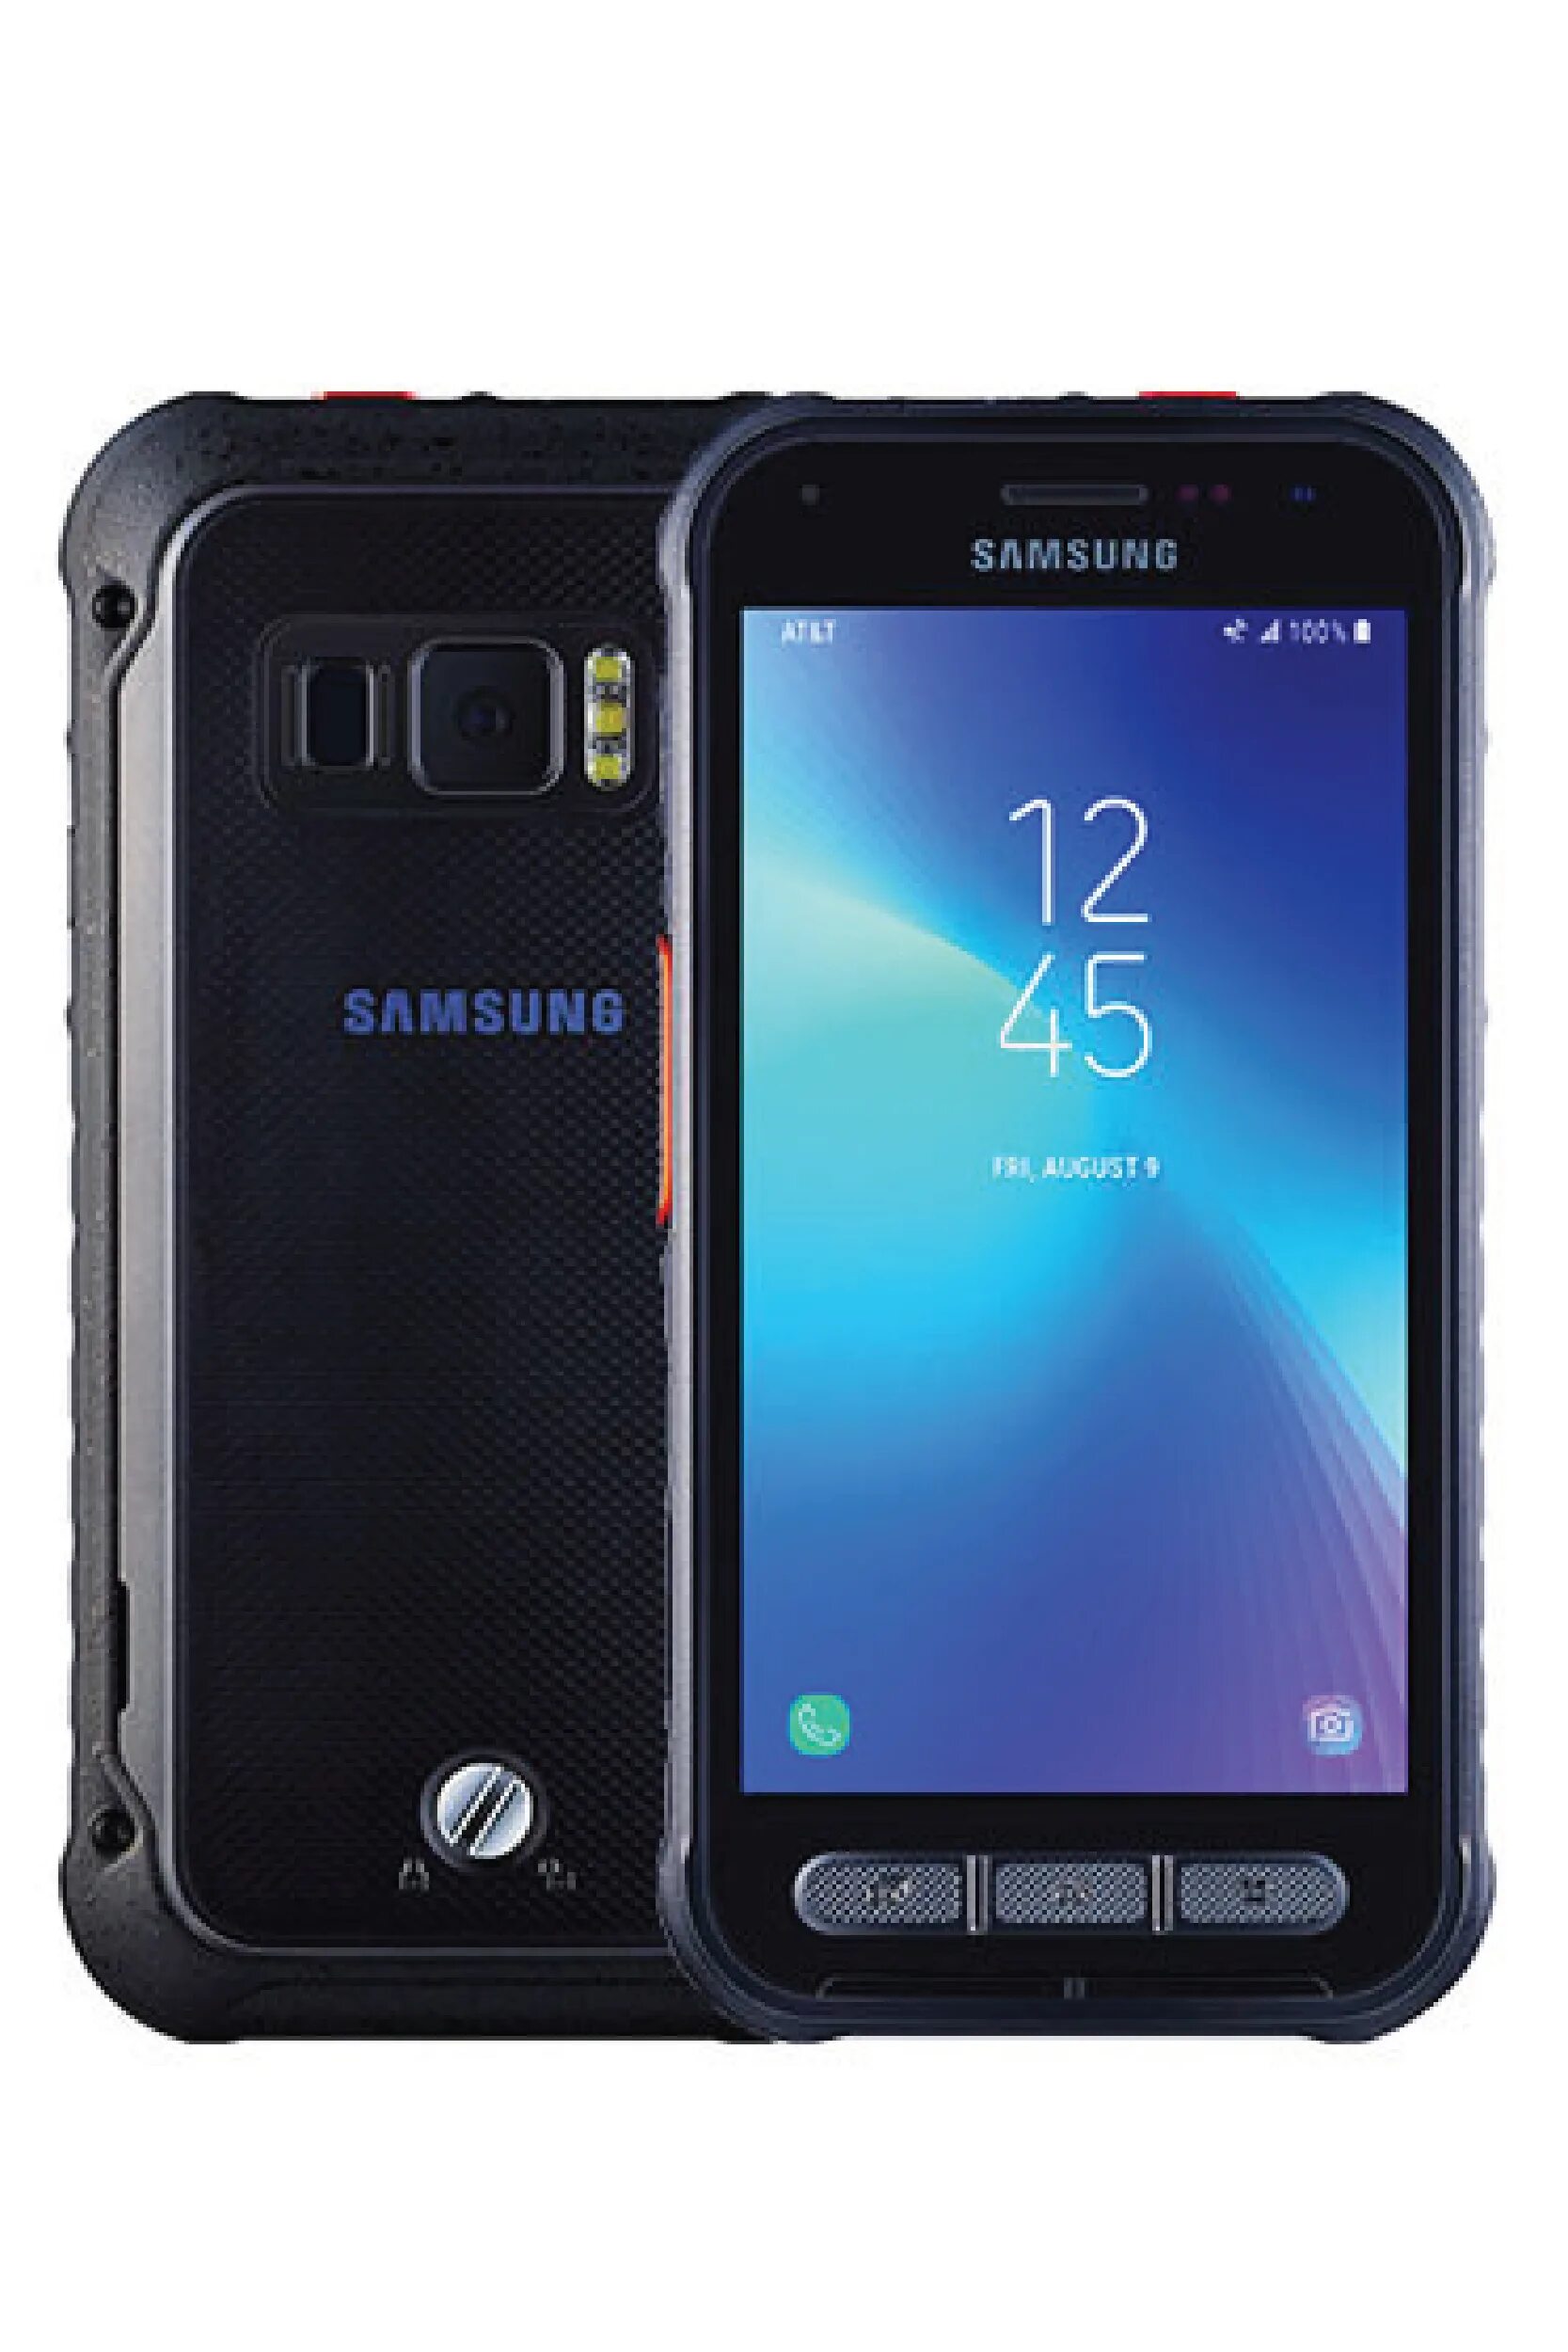 Galaxy xcover 6 pro. Galaxy Xcover 5. Samsung Galaxy Xcover 5. Samsung Galaxy Xcover 5s. Samsung Galaxy Xcover 5 Pro.